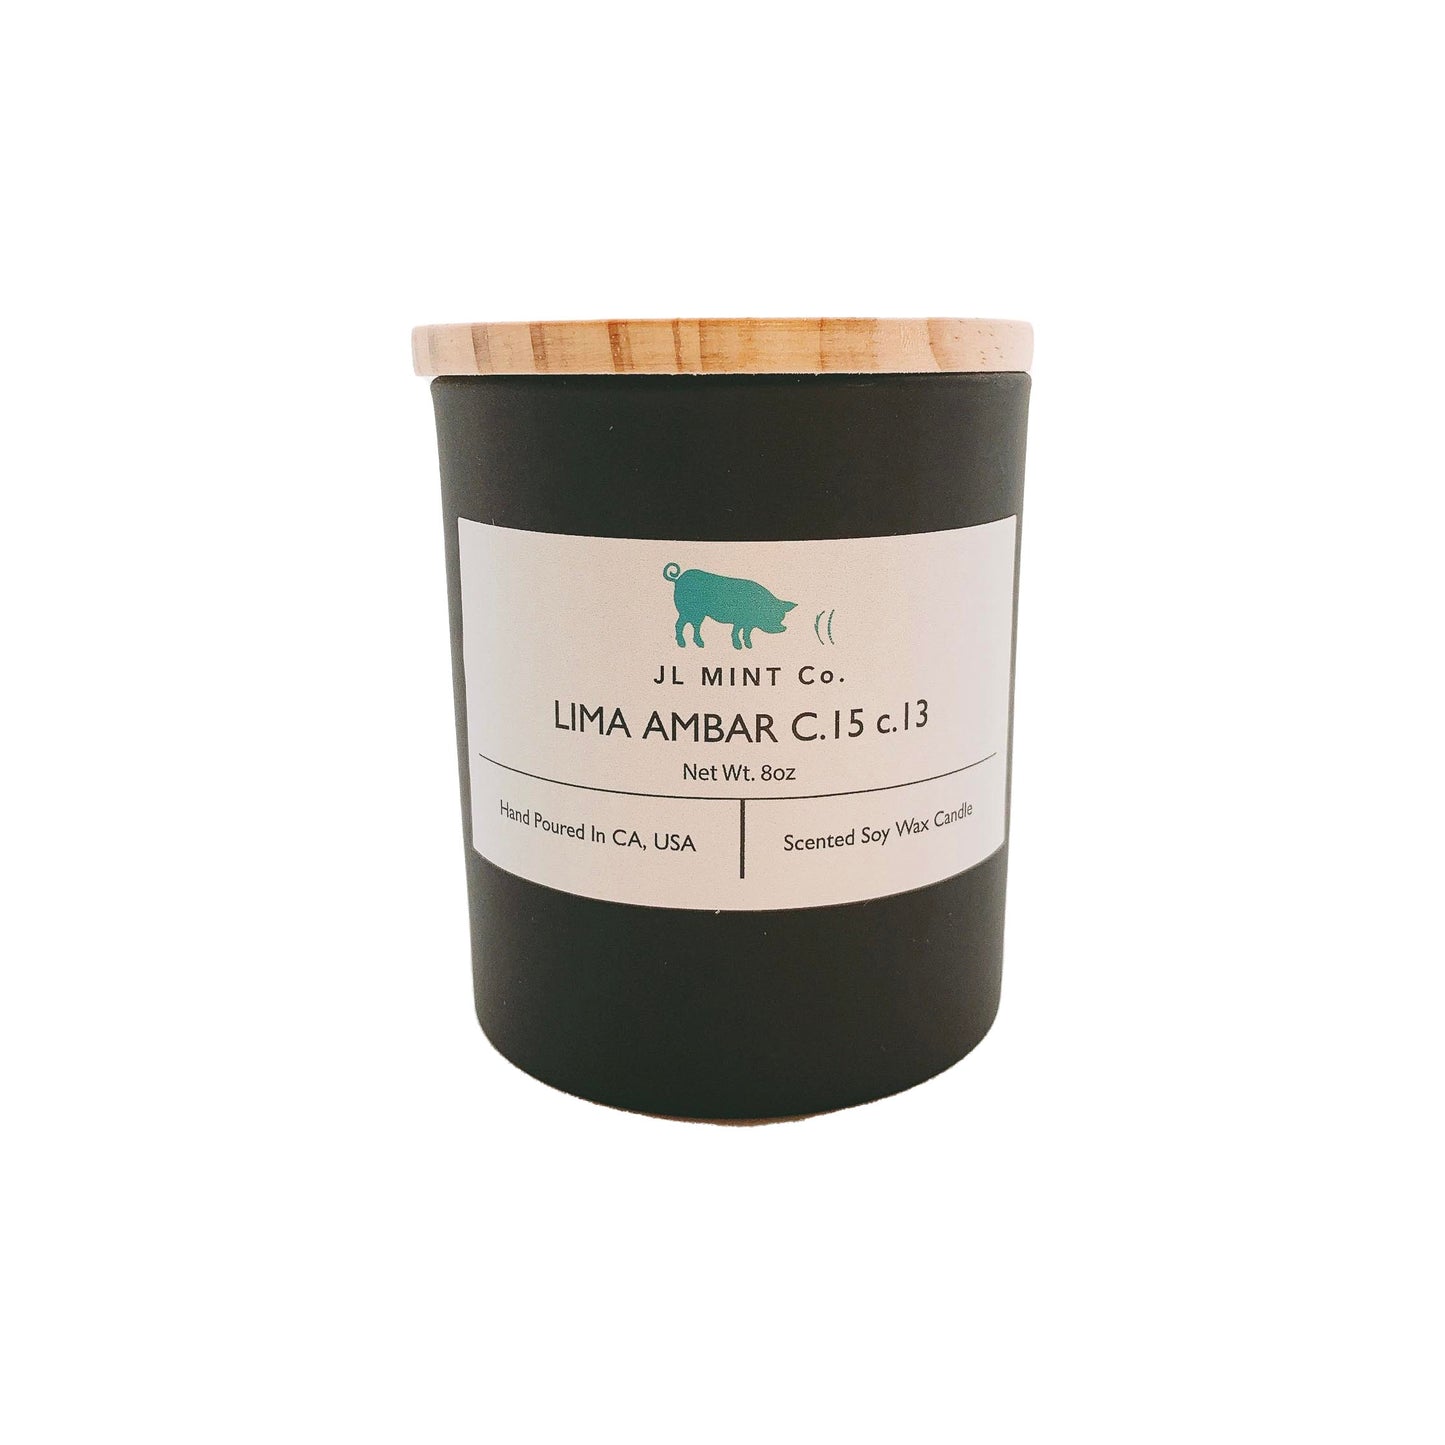 LIMA AMBAR C.15 c.13 JL Mint Co. Soy Wax Candle